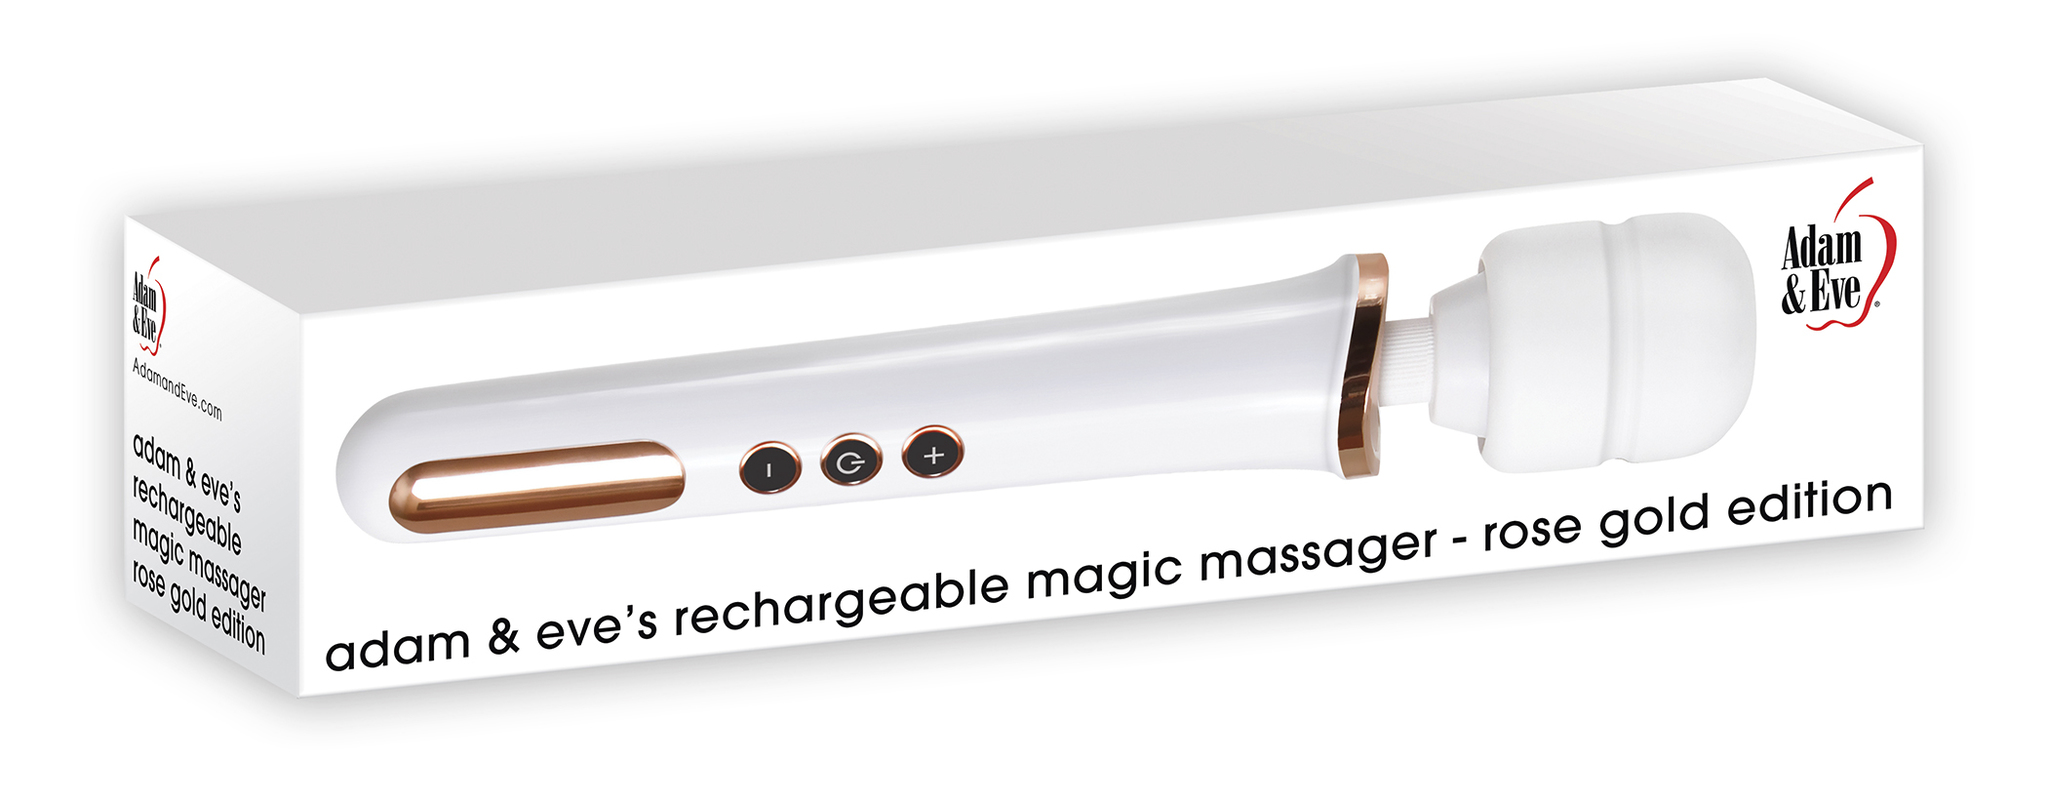 Magic-massager-rose-gold-mockbox.jpg